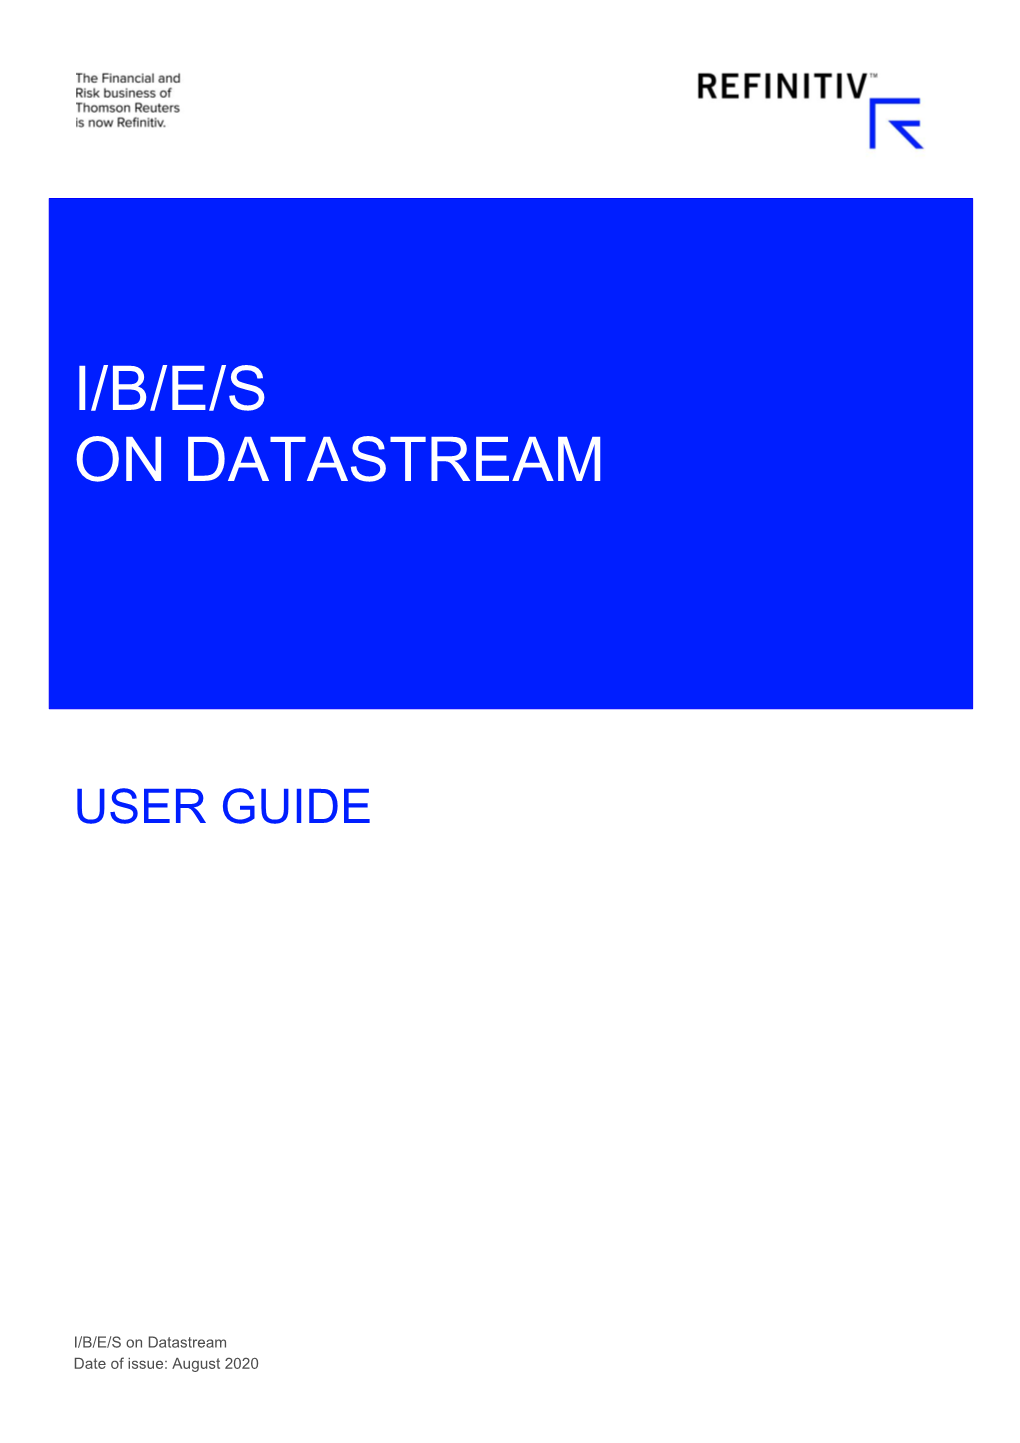 I/B/E/S on Datastream